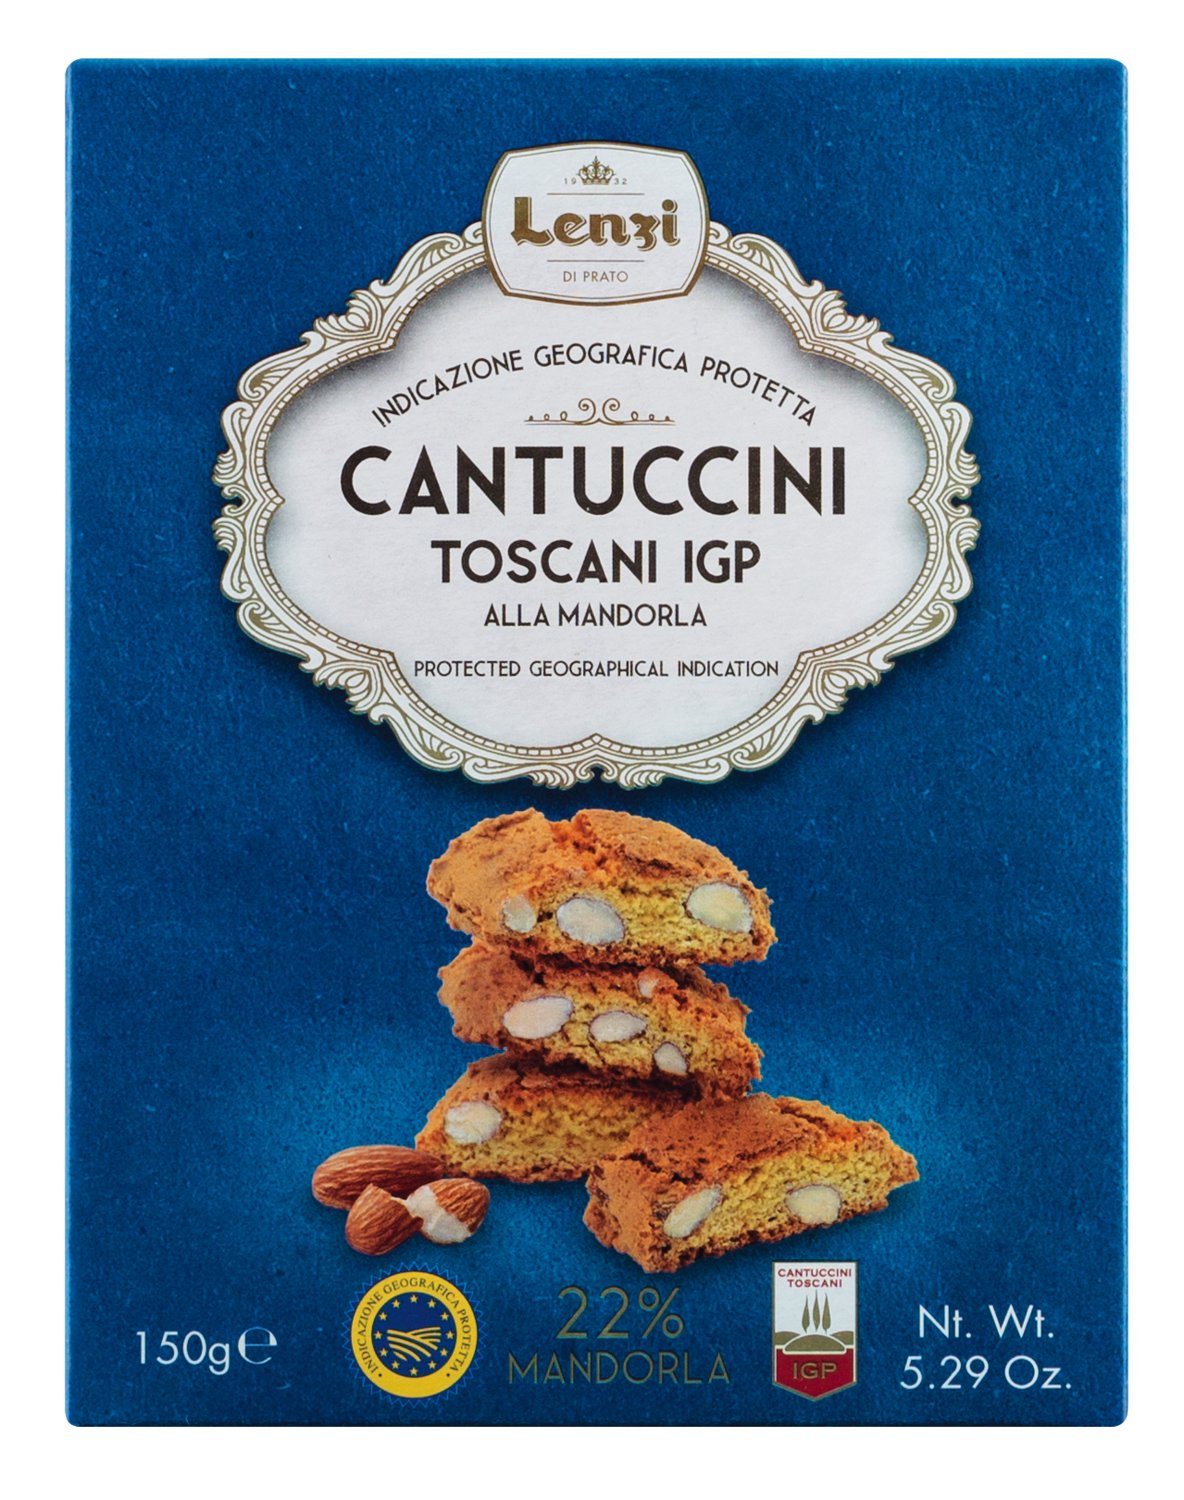 Lenzi Cantuccini toscani IGP alle mandorle - Toskanische Mandelkekse